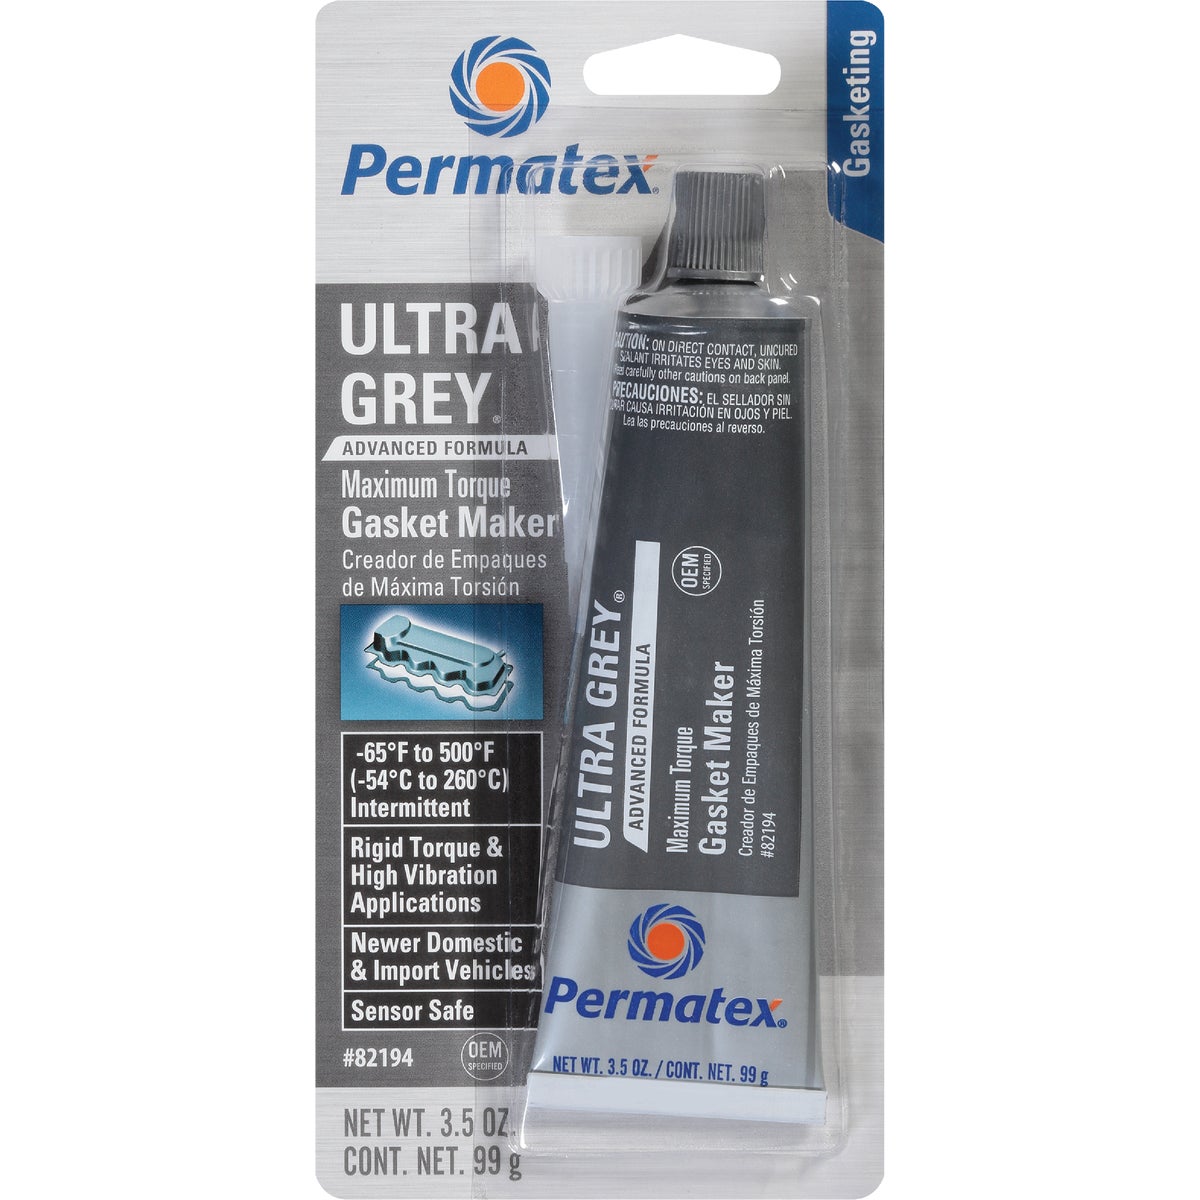 Permatex 3 Oz. Ultra Grey Silicone Gasket Maker